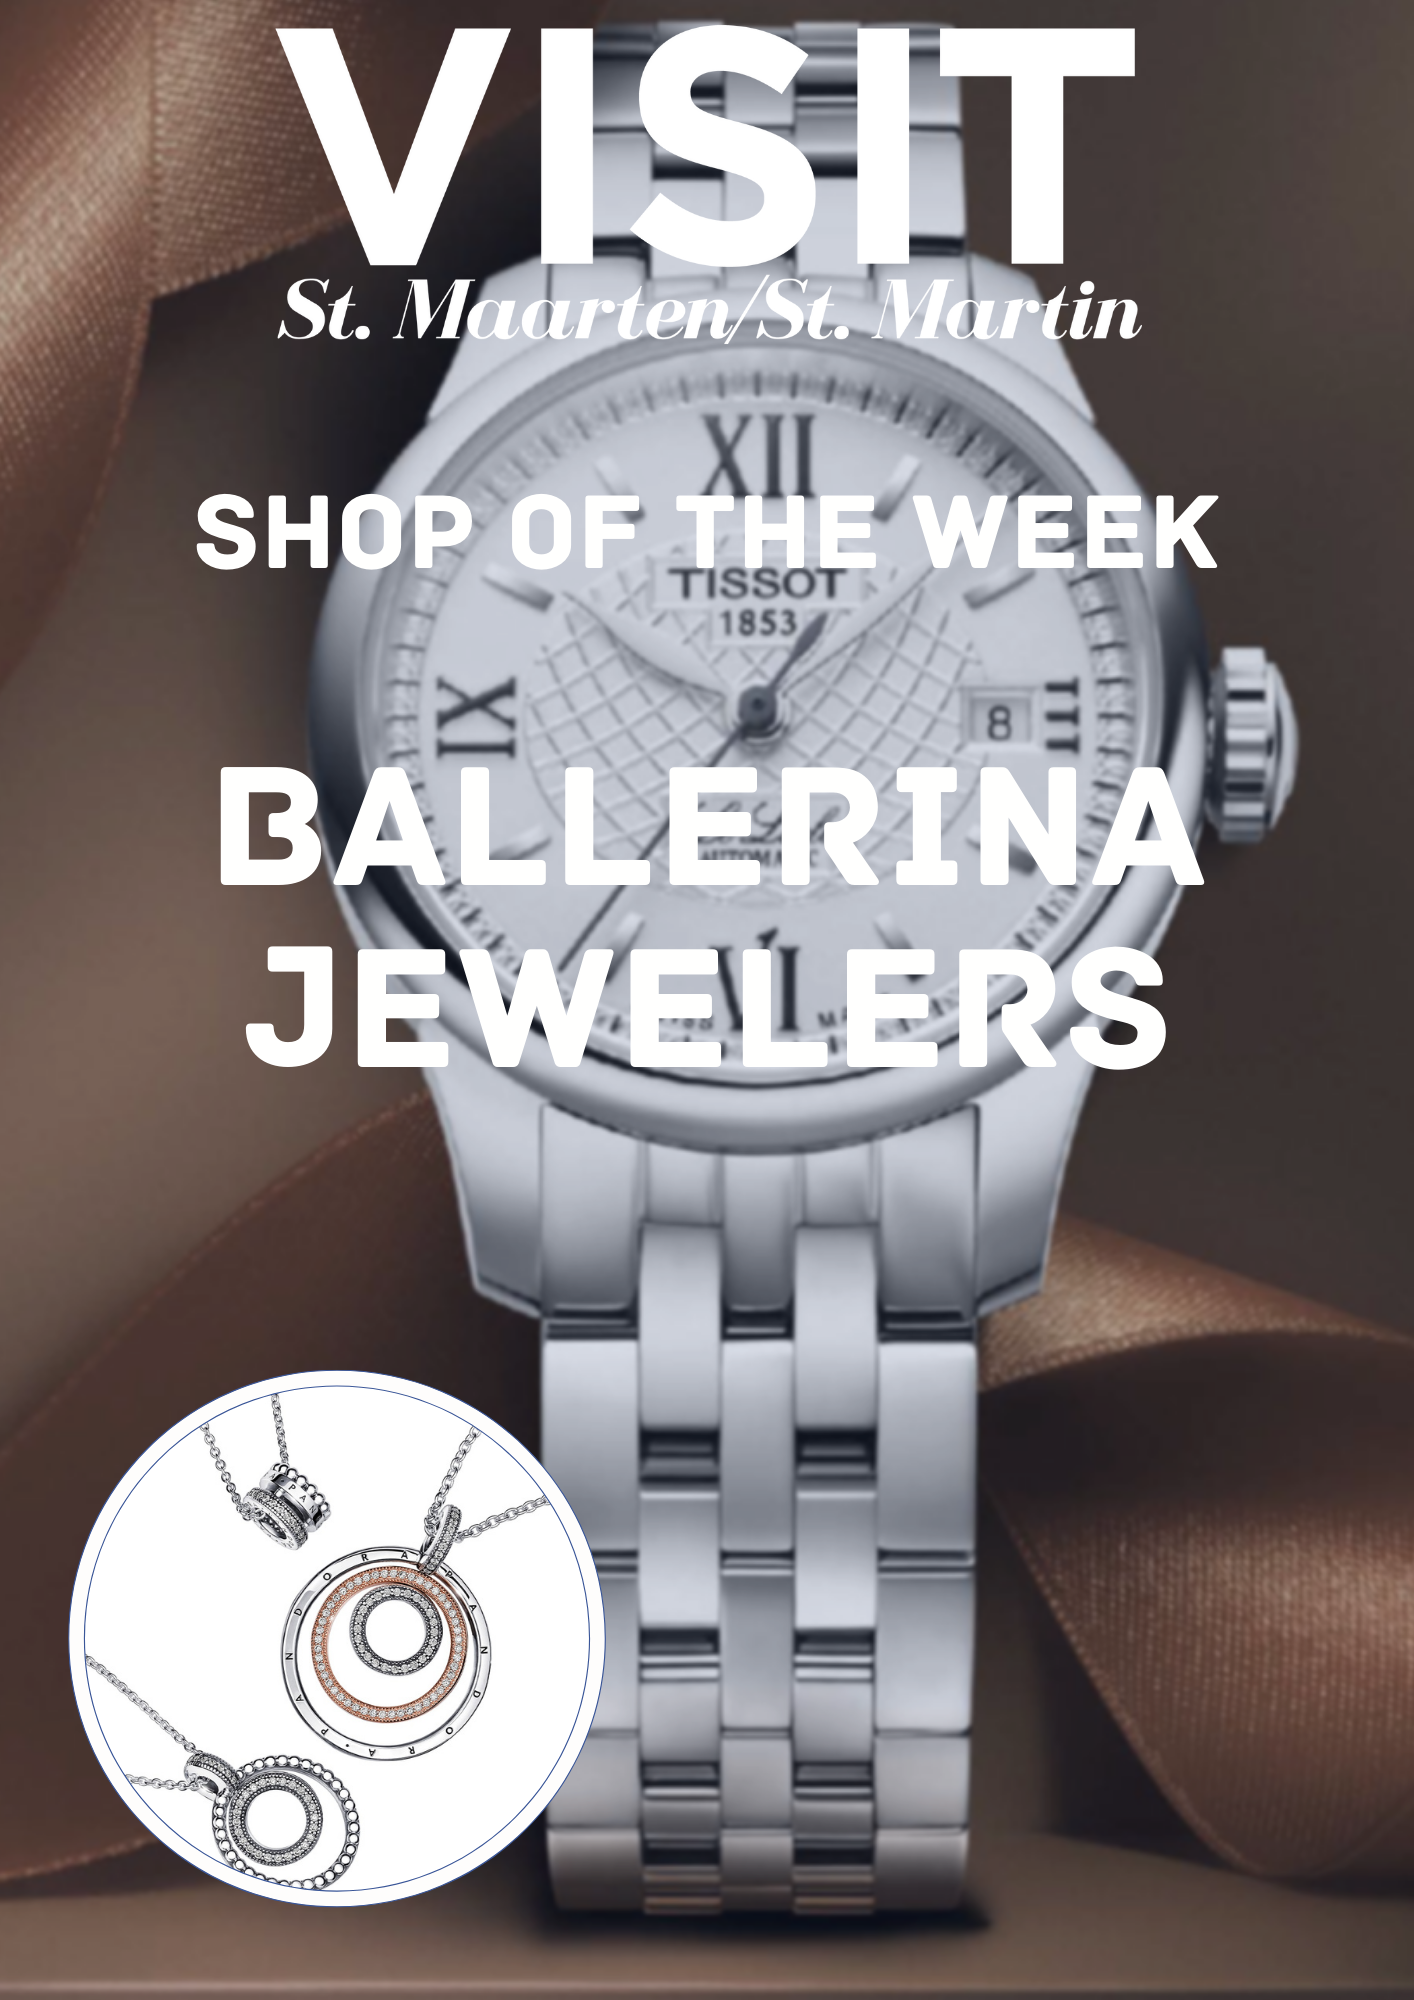 Ballerina Jewelers selection on St. Maarten